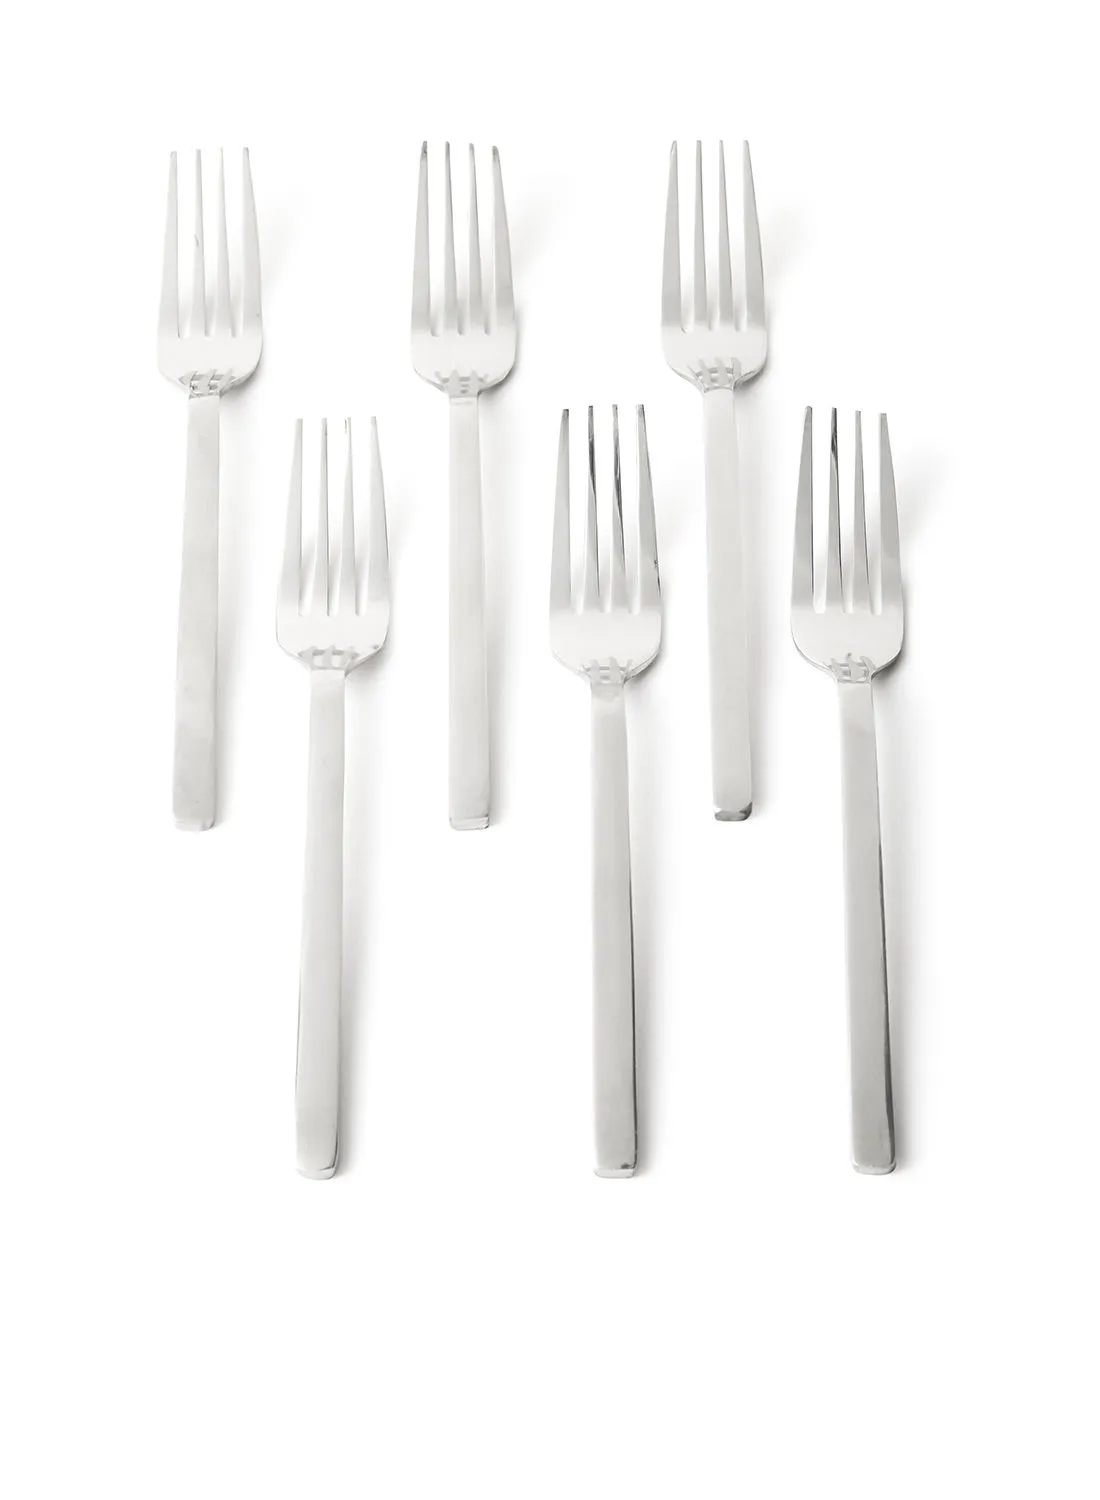 noon east 6 Piece Forks Set - Made Of Stainless Steel - Silverware Flatware - Fork Set - Serves 6 - Design Silver Lyra